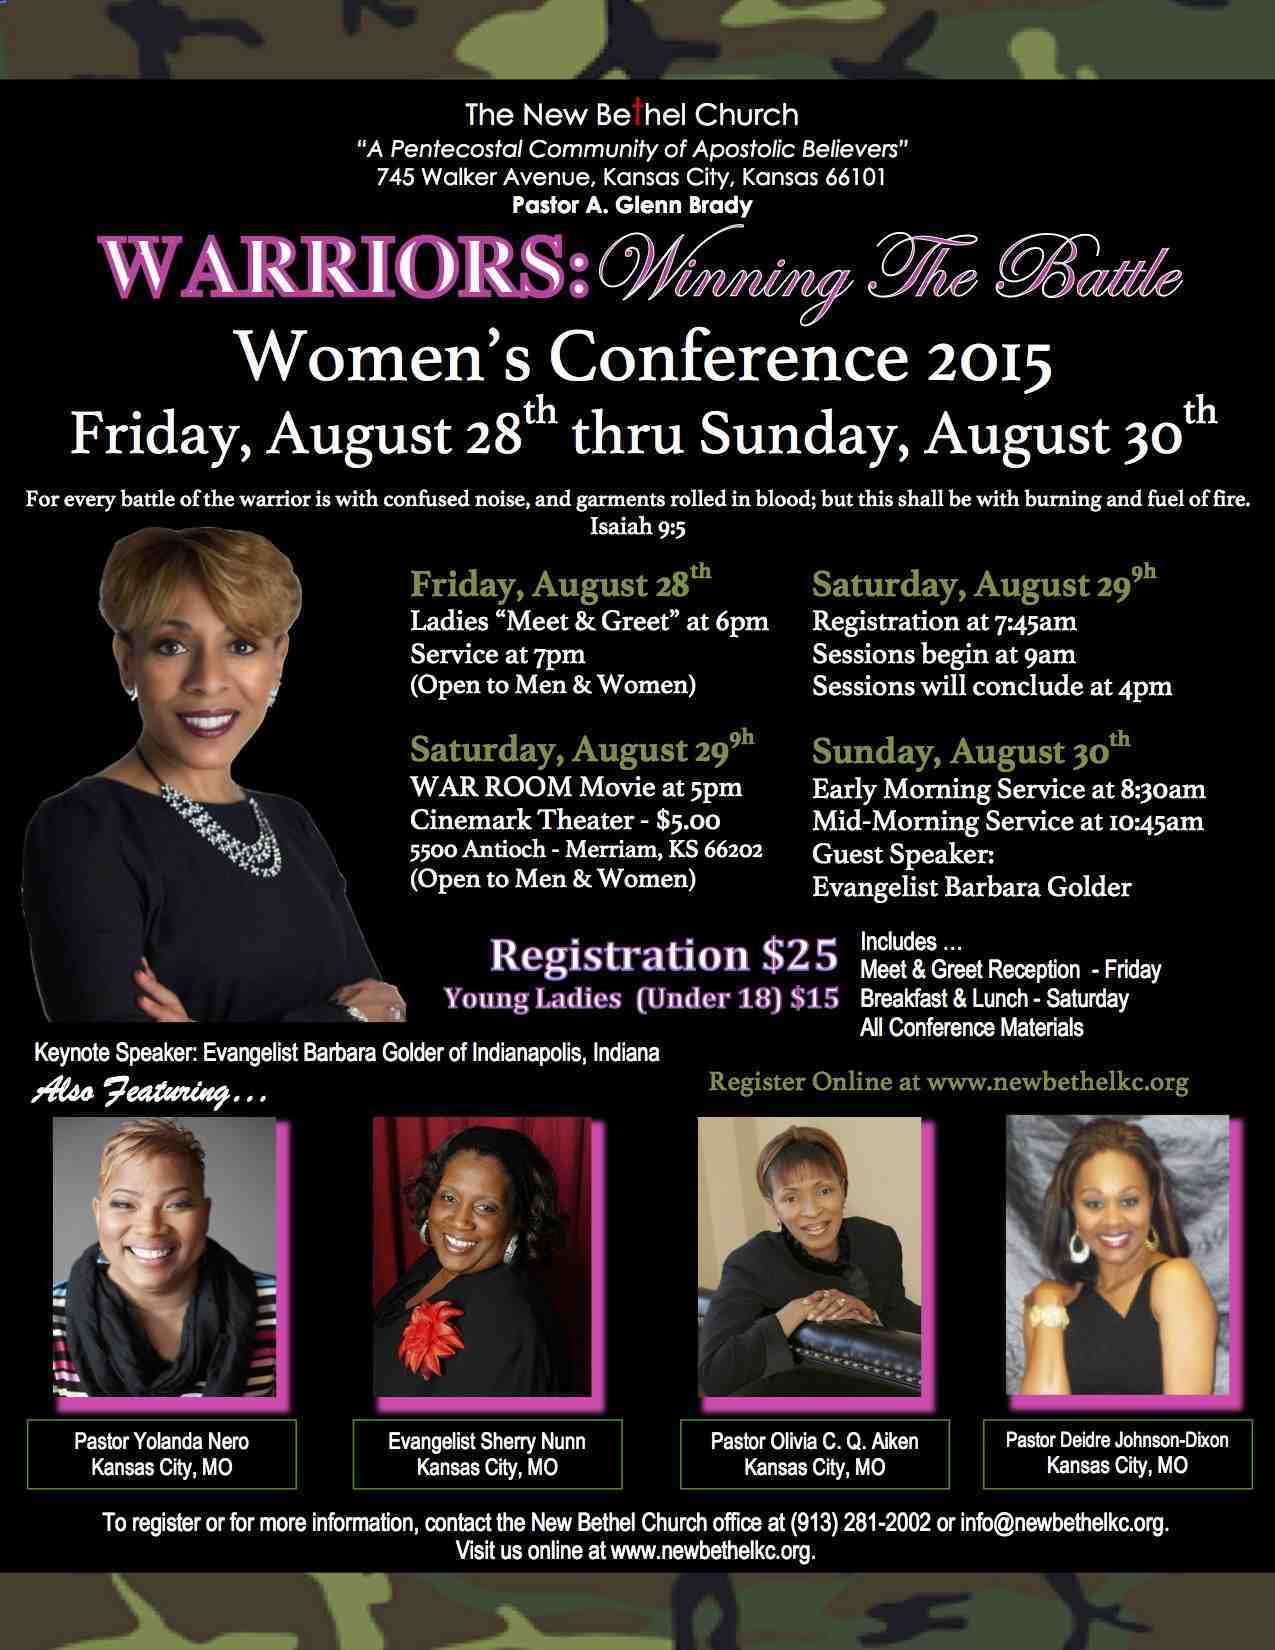 Women’s Conference “Warriors Winning the Battle” The New Bethel Church